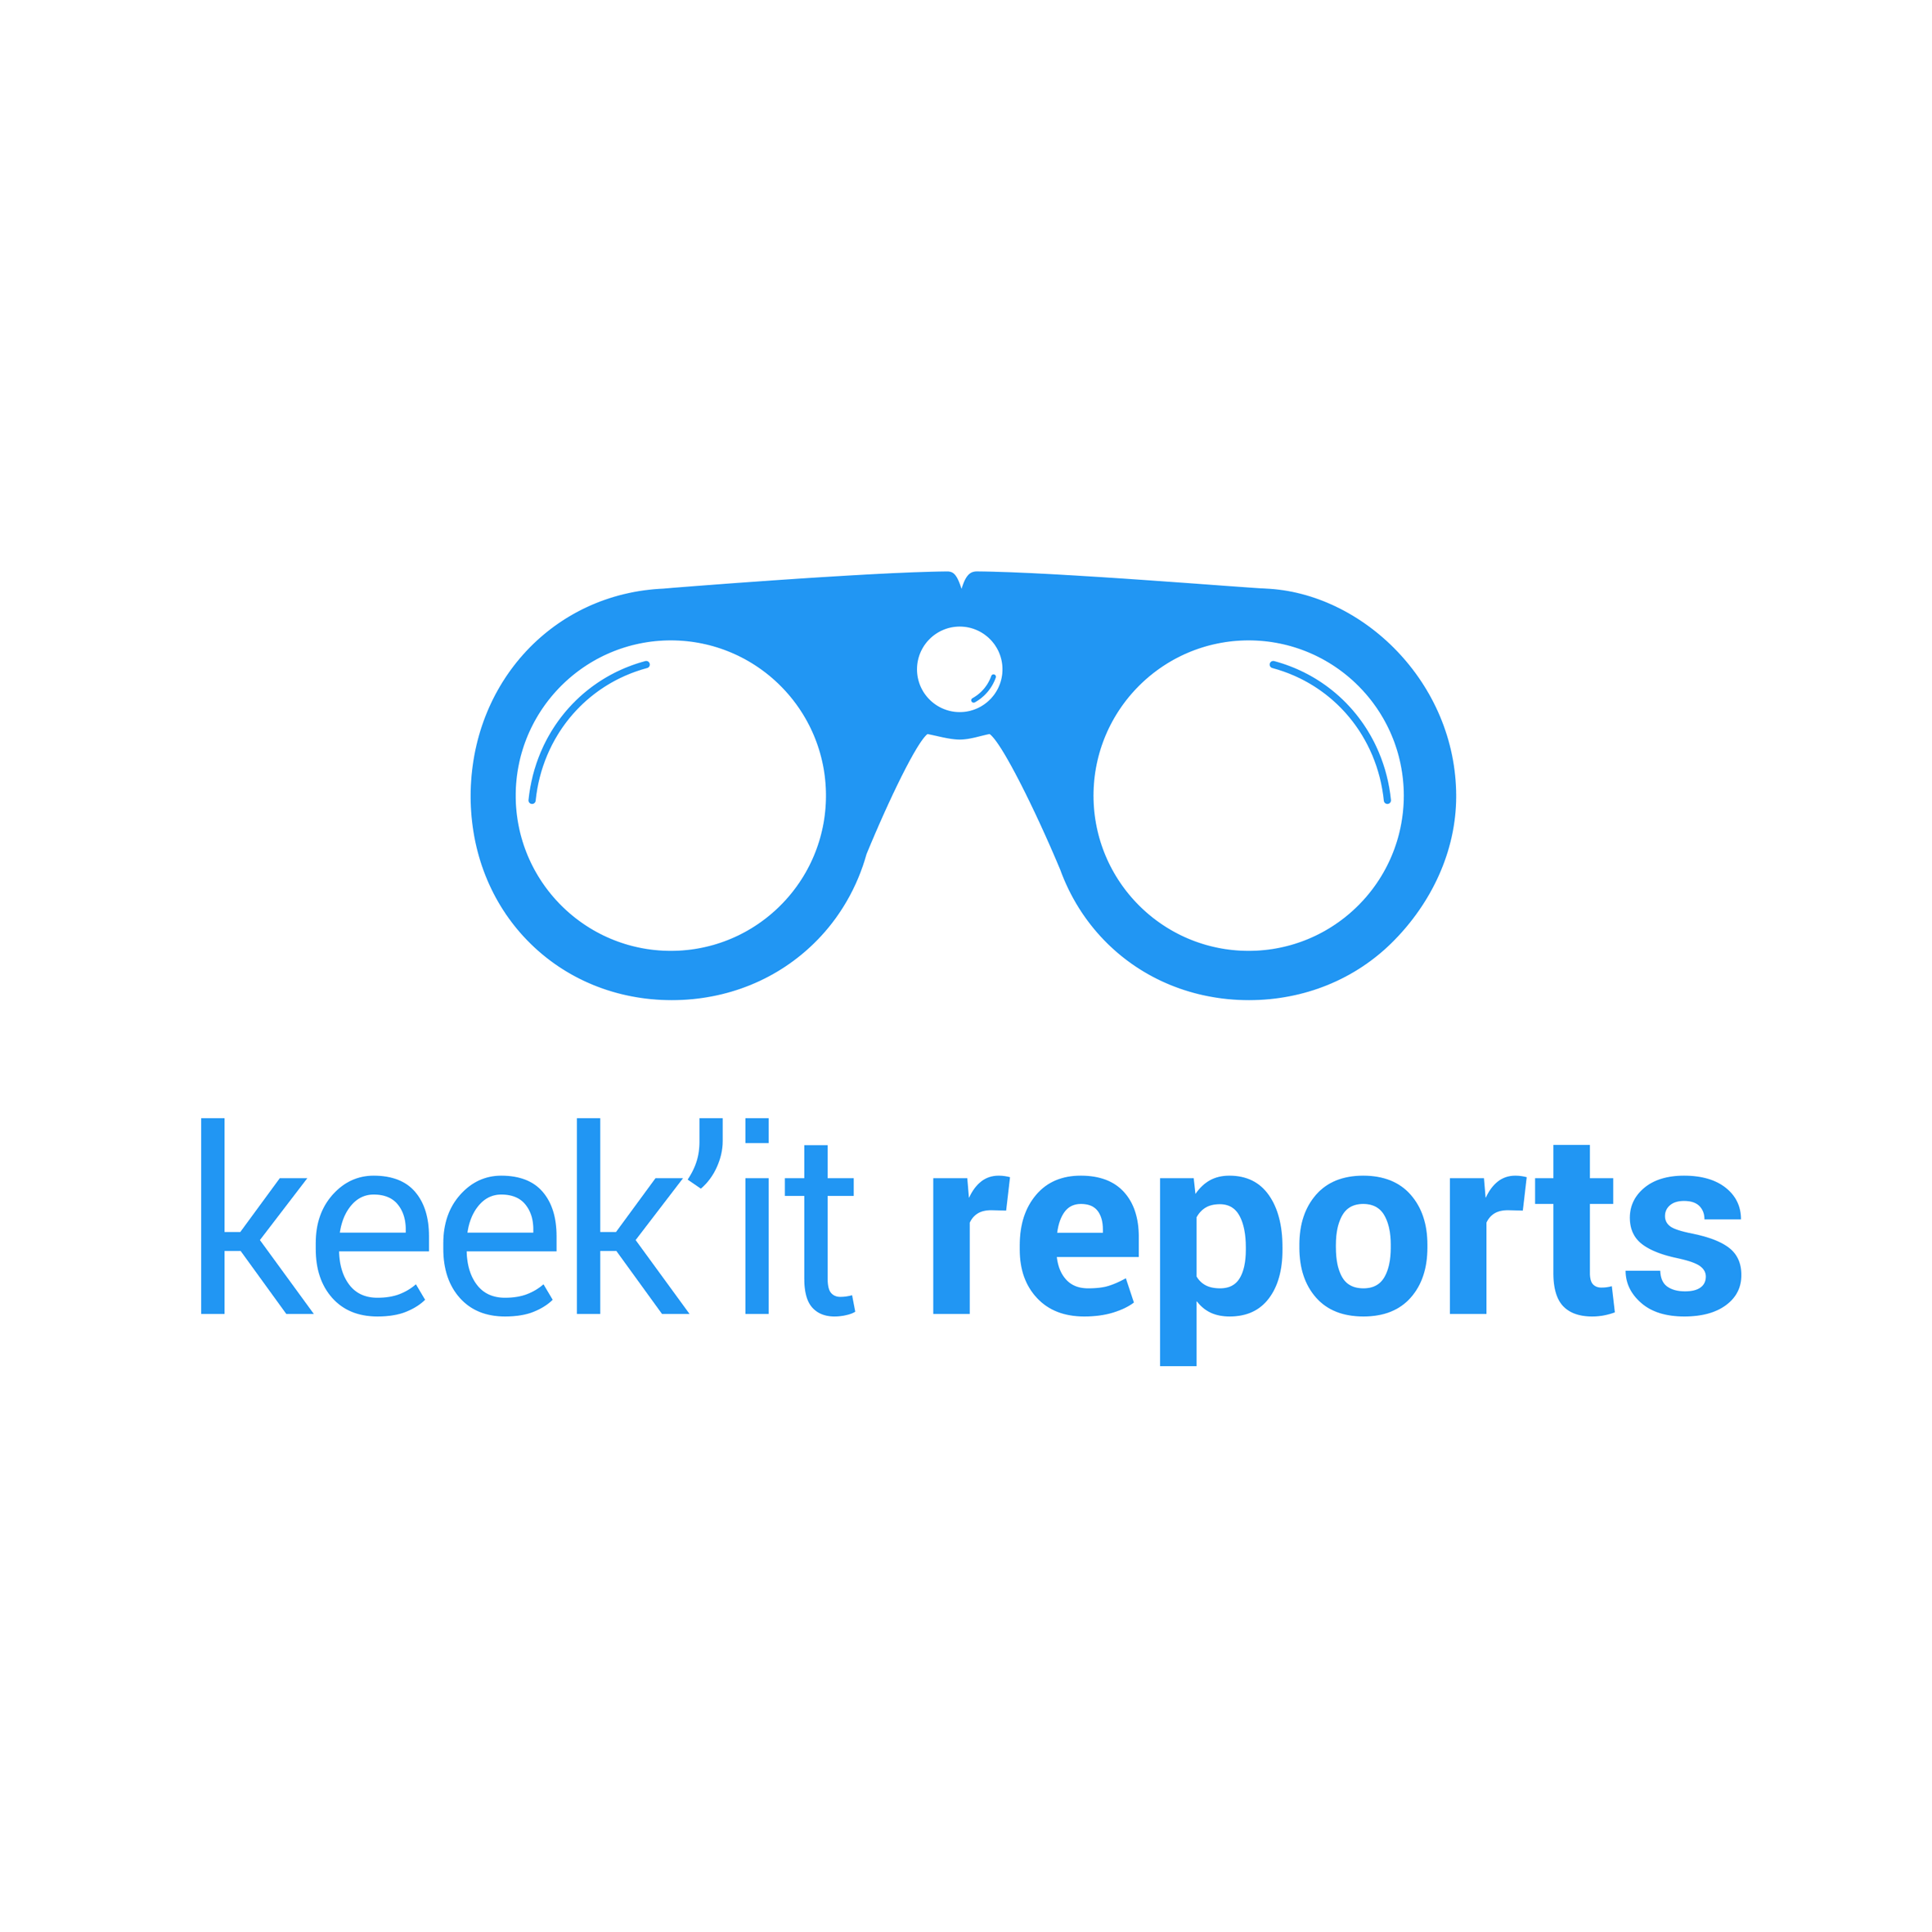 Keekit Reports